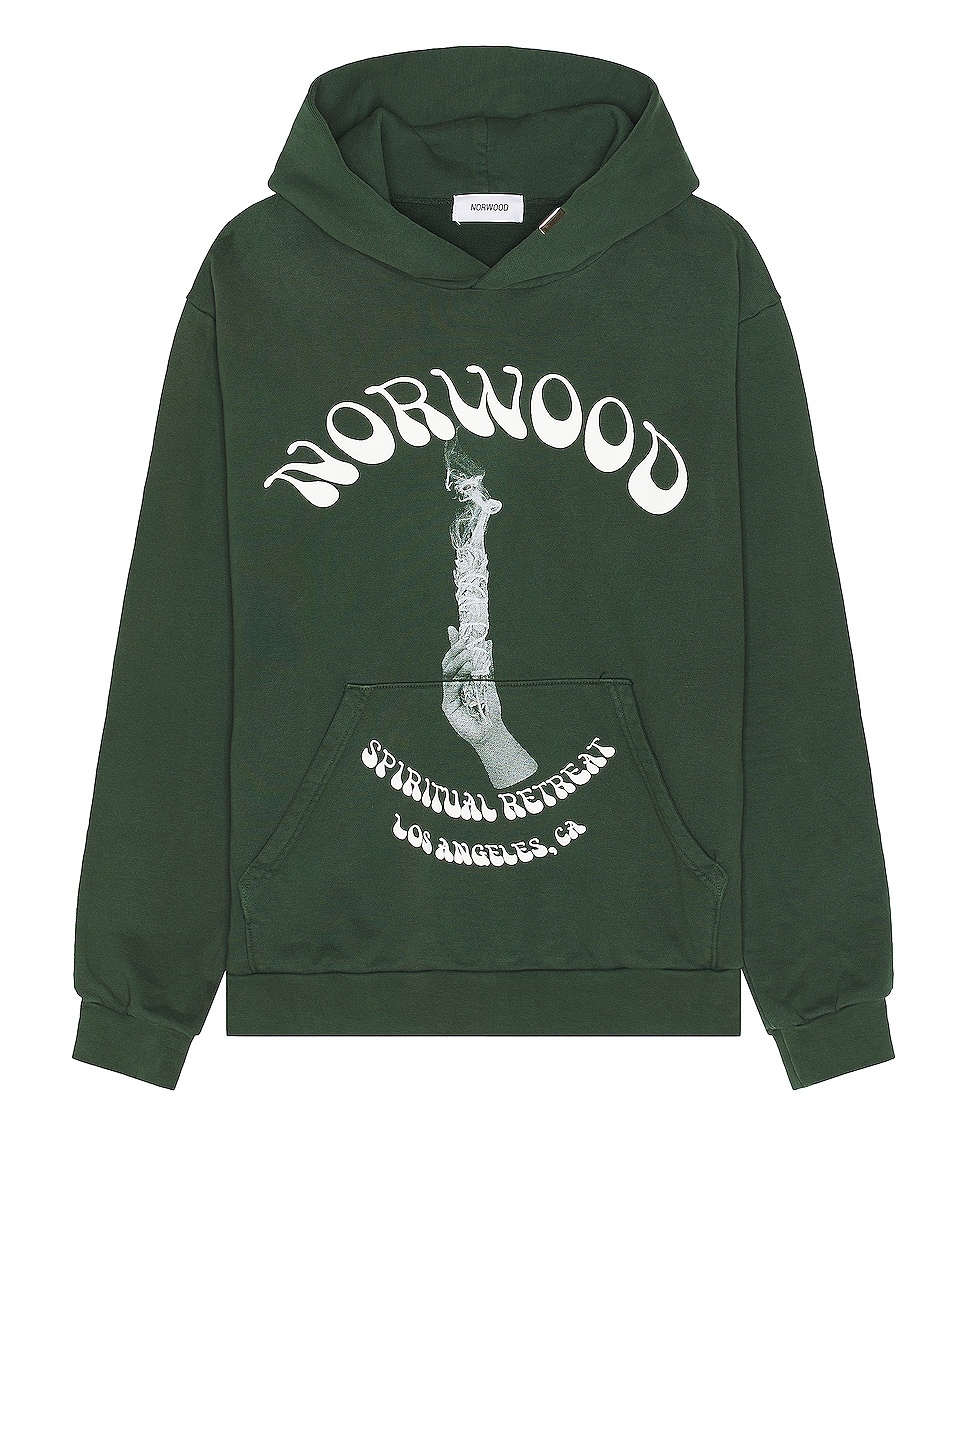 Image 1 of Norwood Hardrock Hoodie in Forest